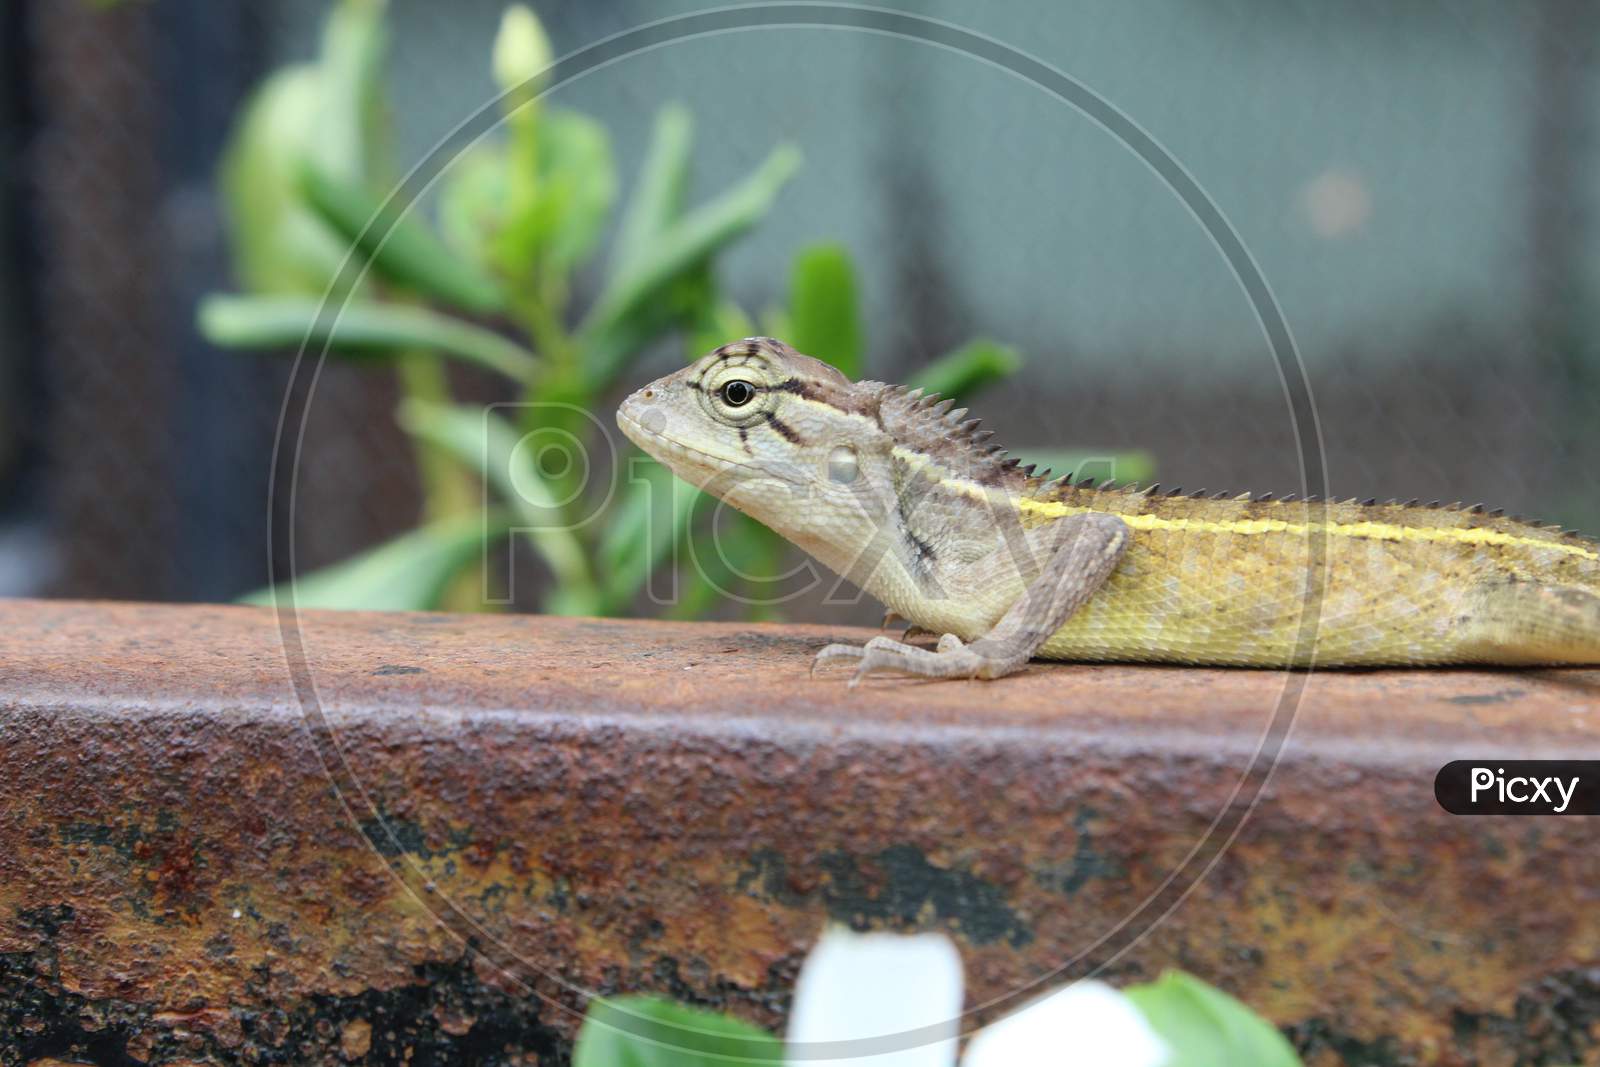 Garden Lizard At a House